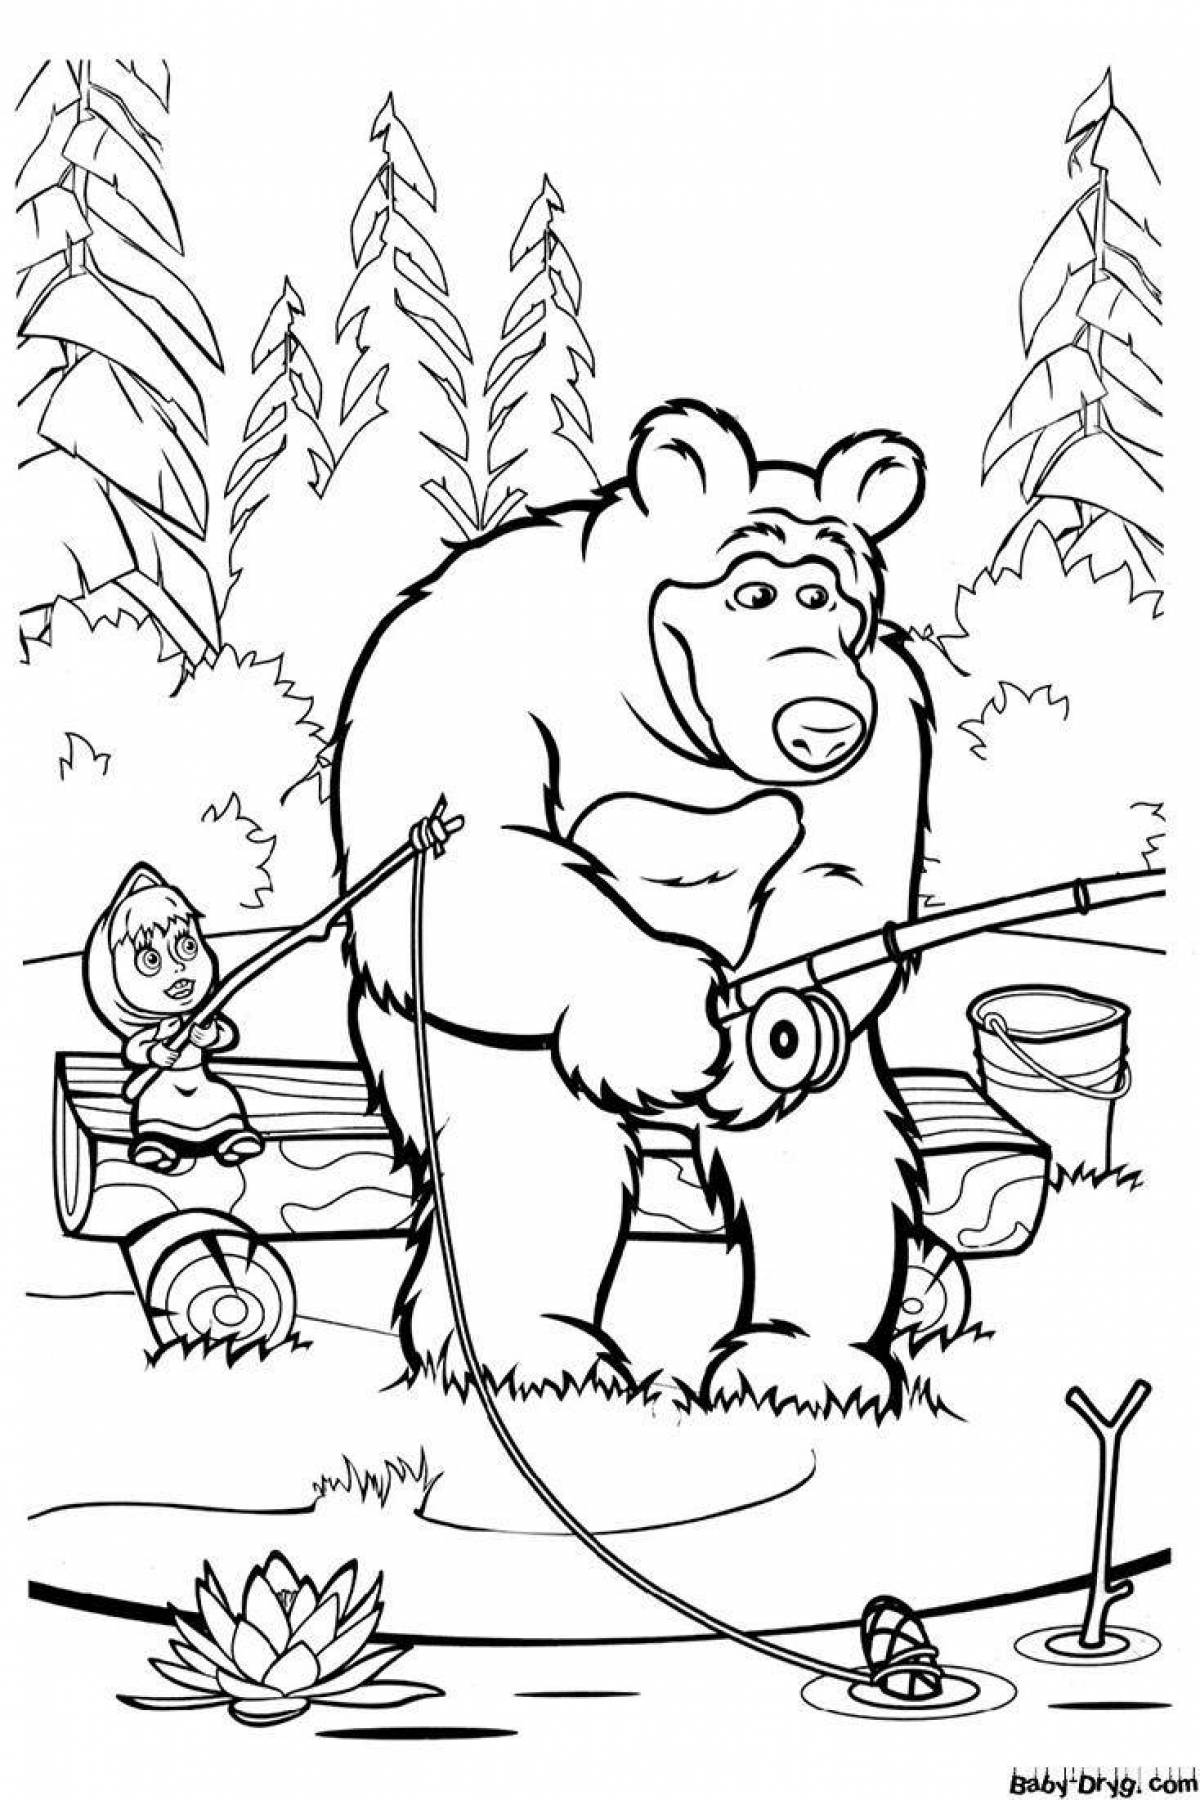 Brilliant masha and the bear coloring book